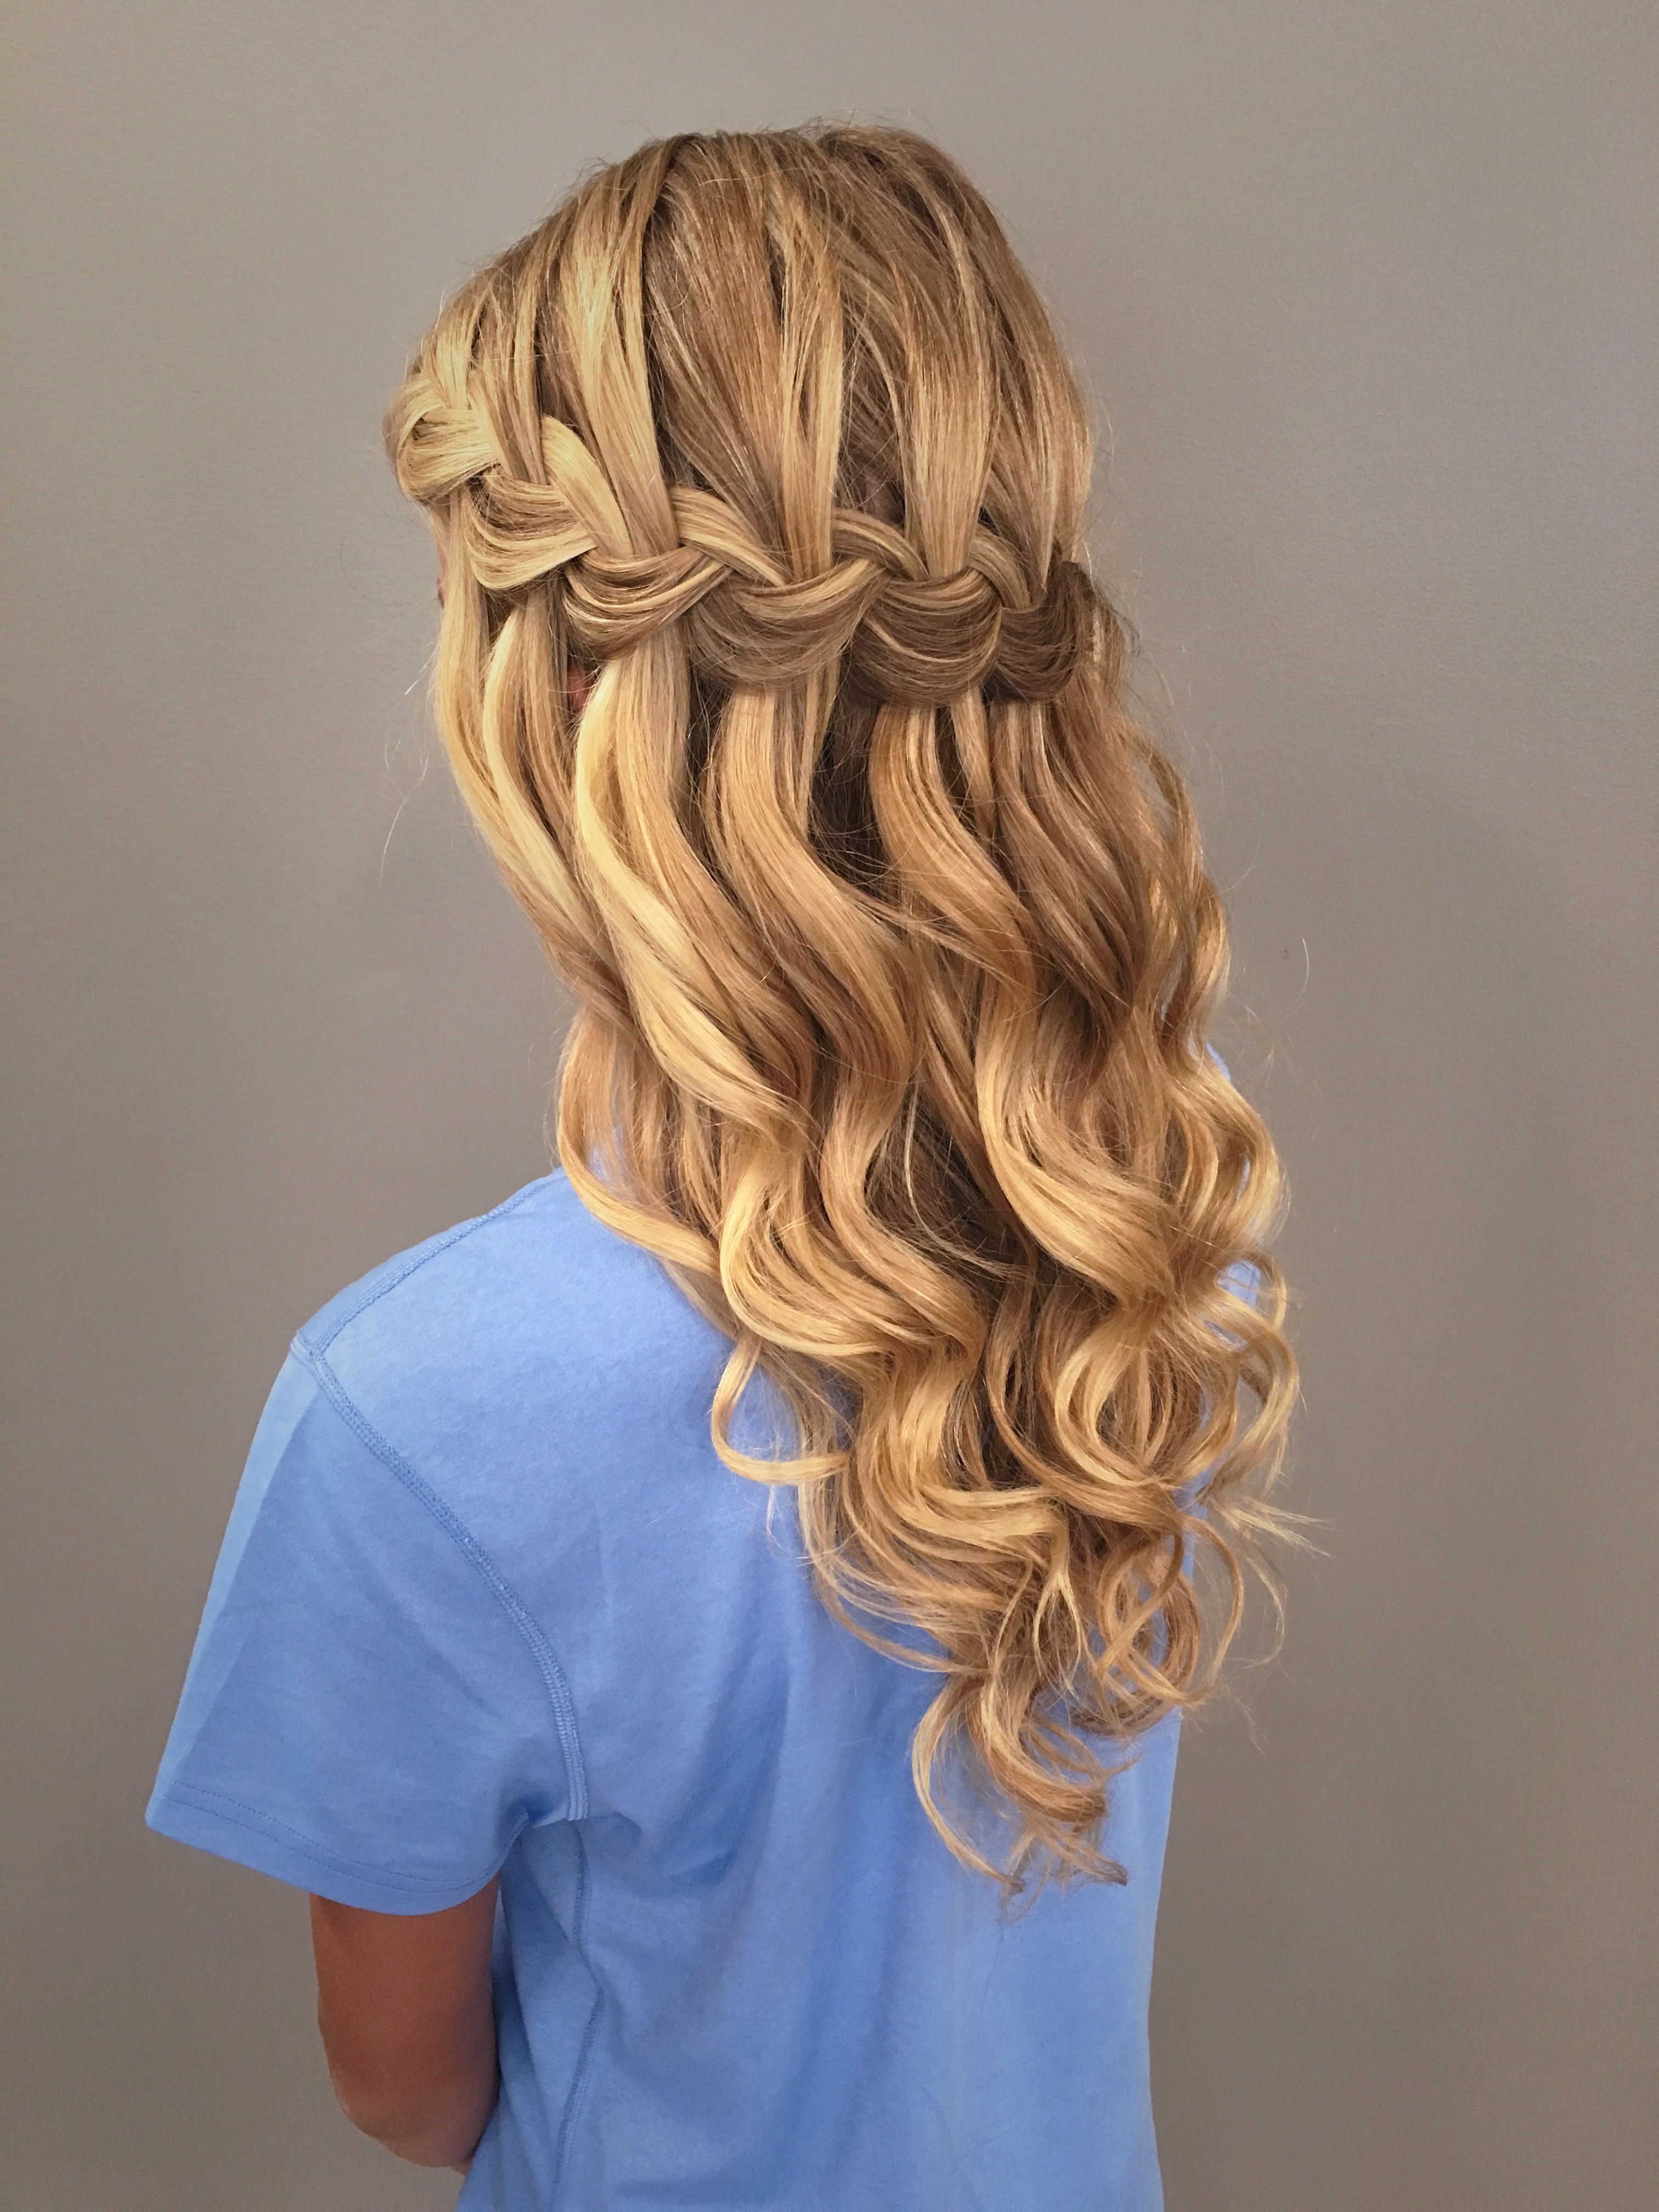 Waterfall Braid With Mermaid Waves! Great Bridal, Prom, Or Pertaining To Most Popular Waterfall Mermaid Braid Hairstyles (View 5 of 20)